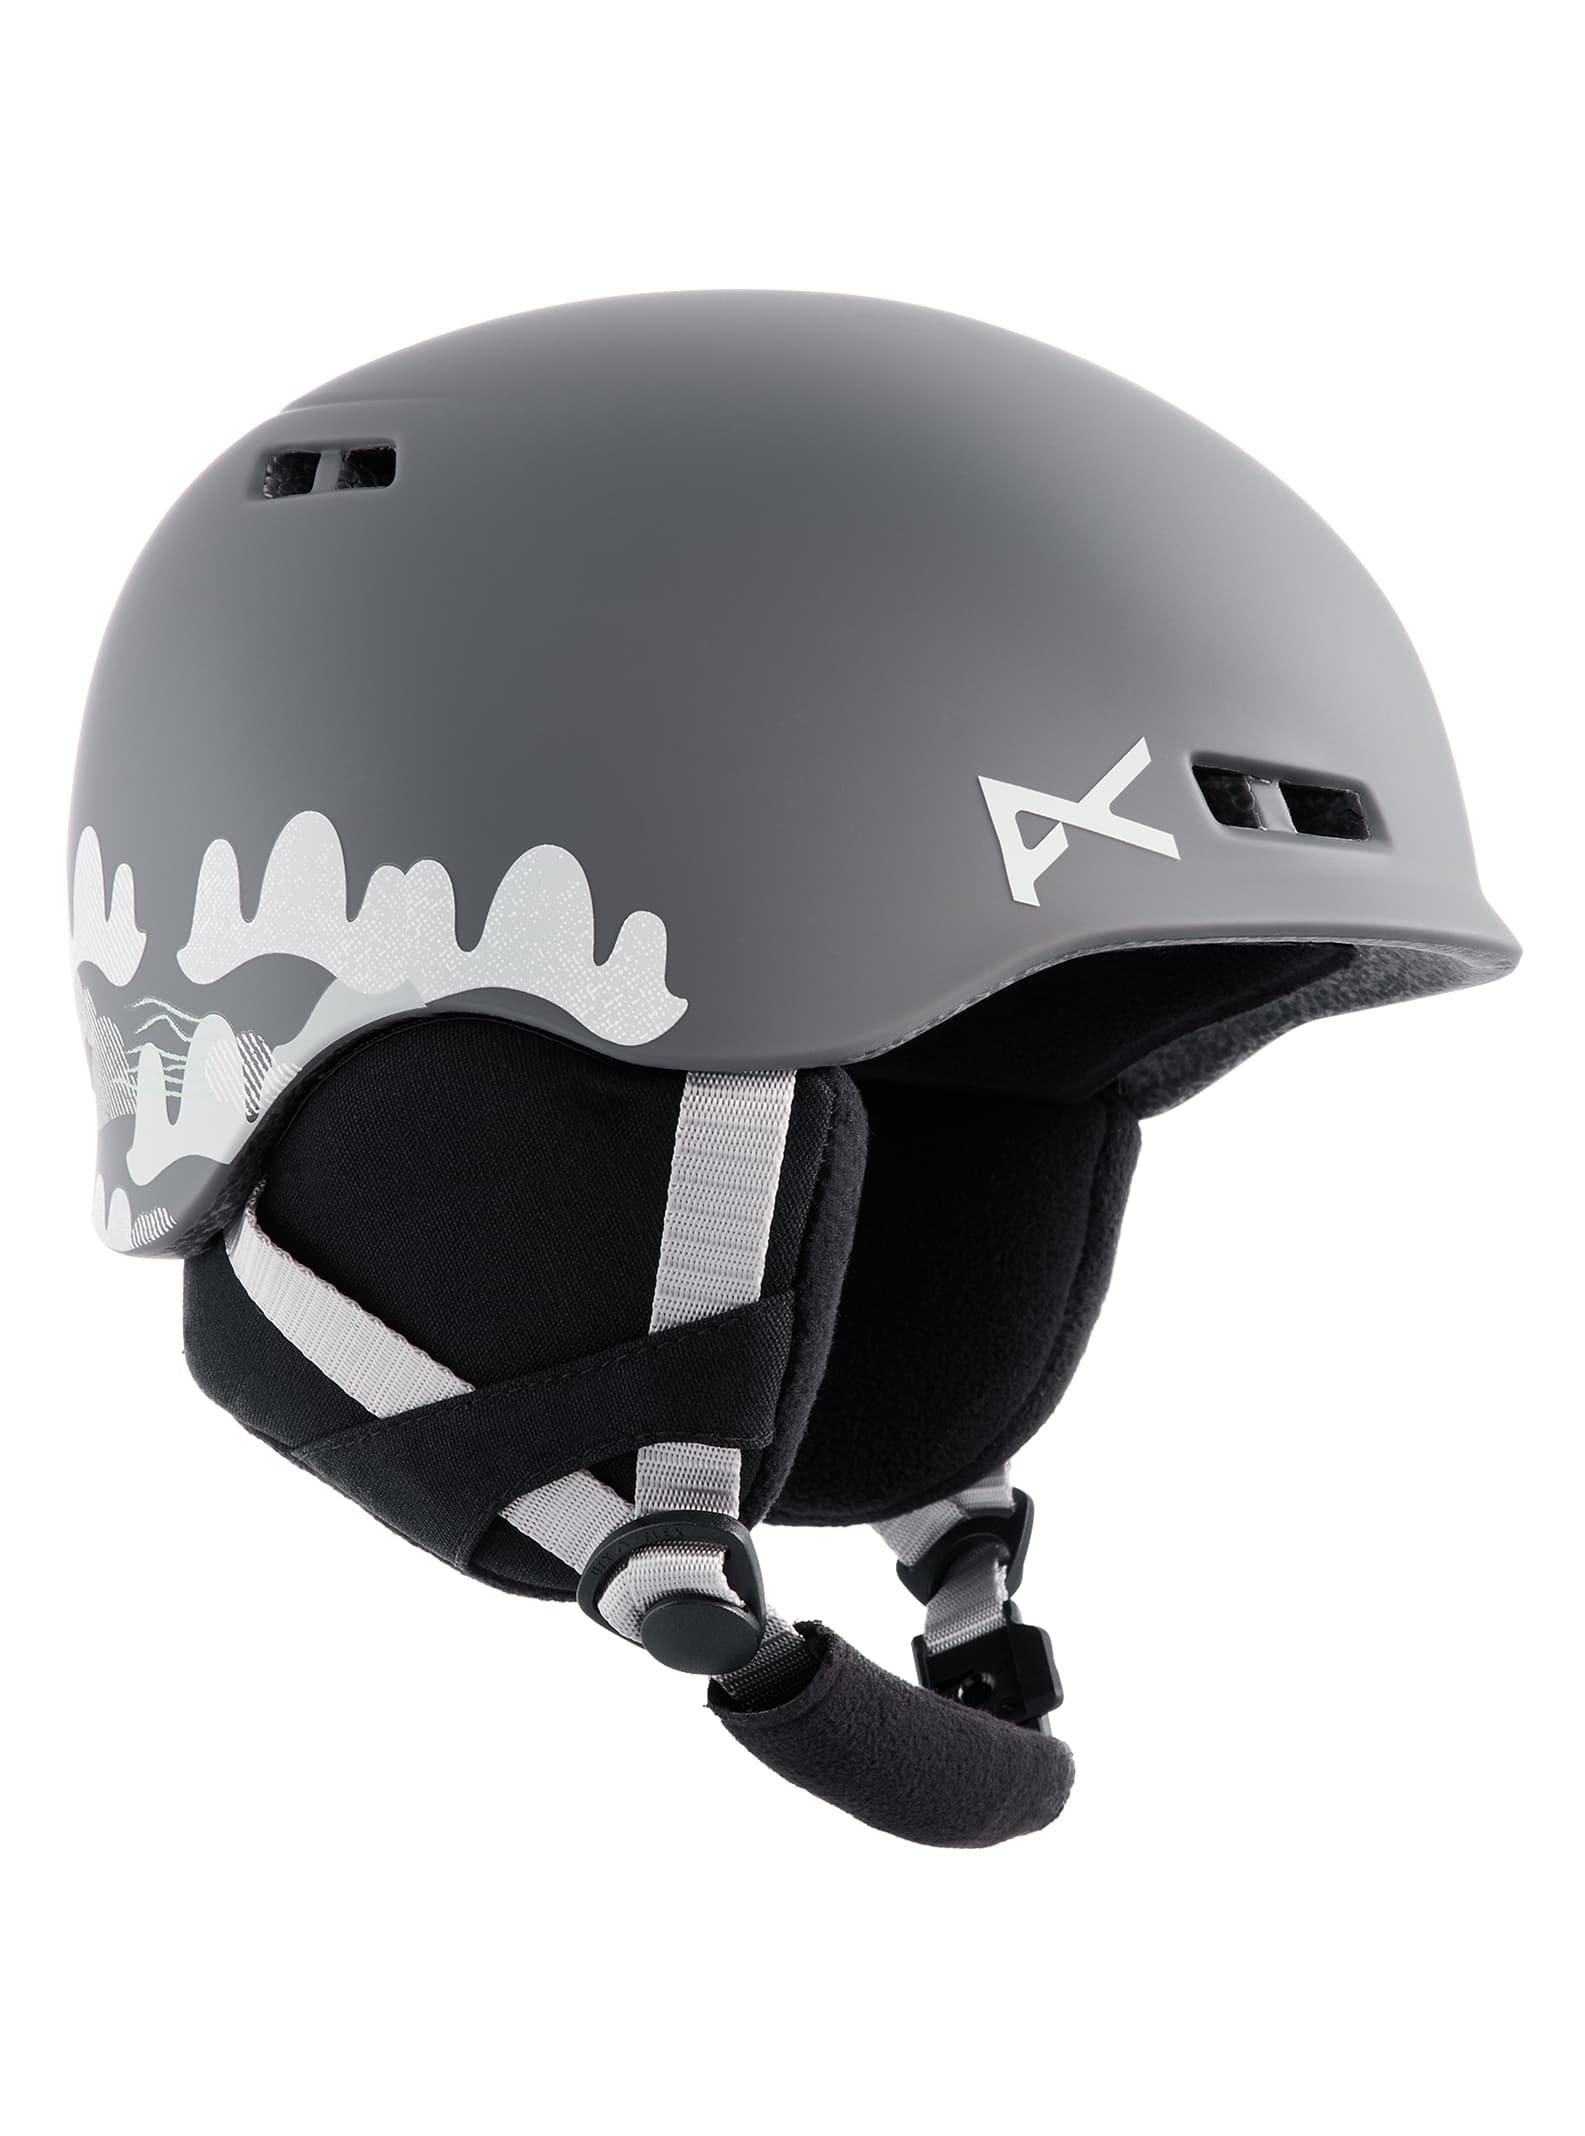 Comstock Kids' Ski & Snowboard Helmet